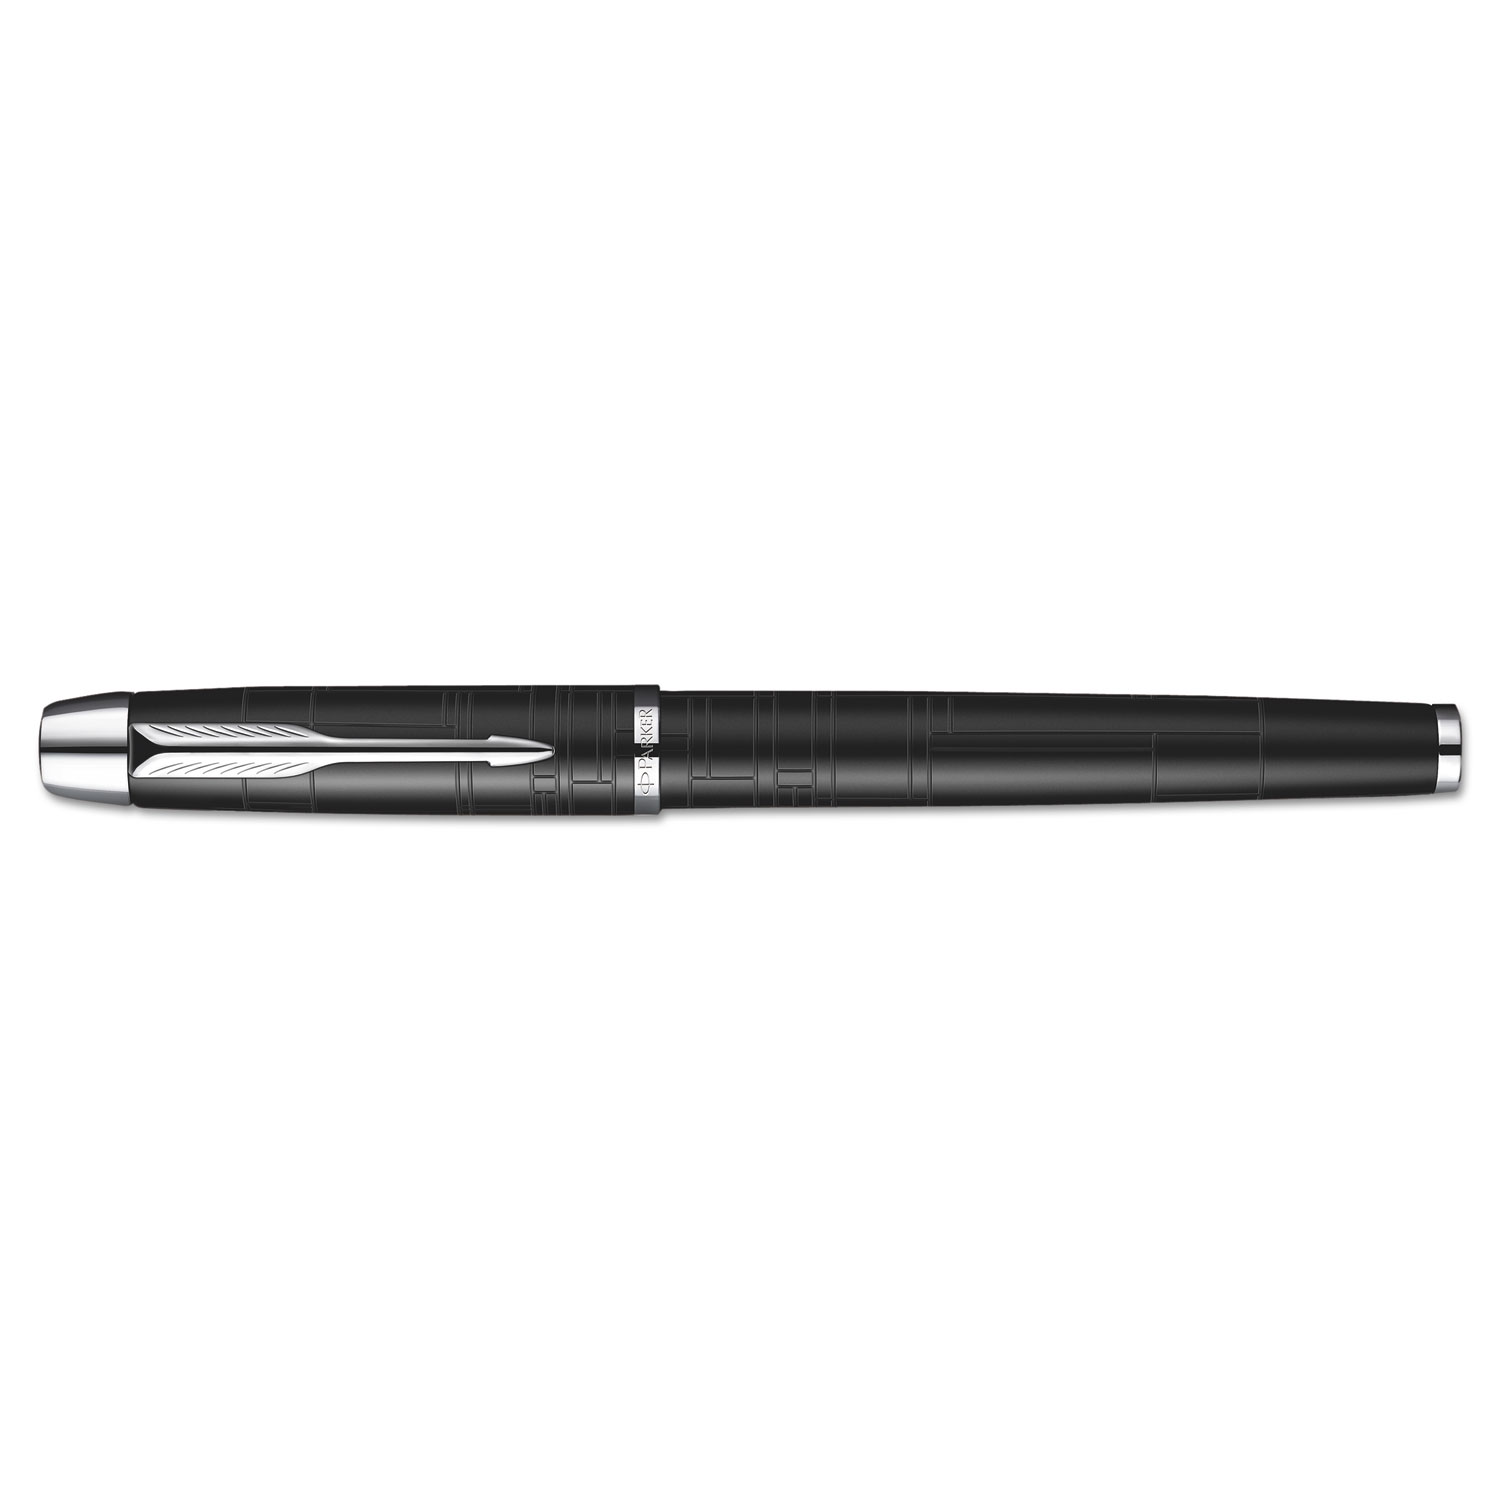 IM Premium Roller Ball Pen, Black with Chrome Trim, Black Ink, Fine